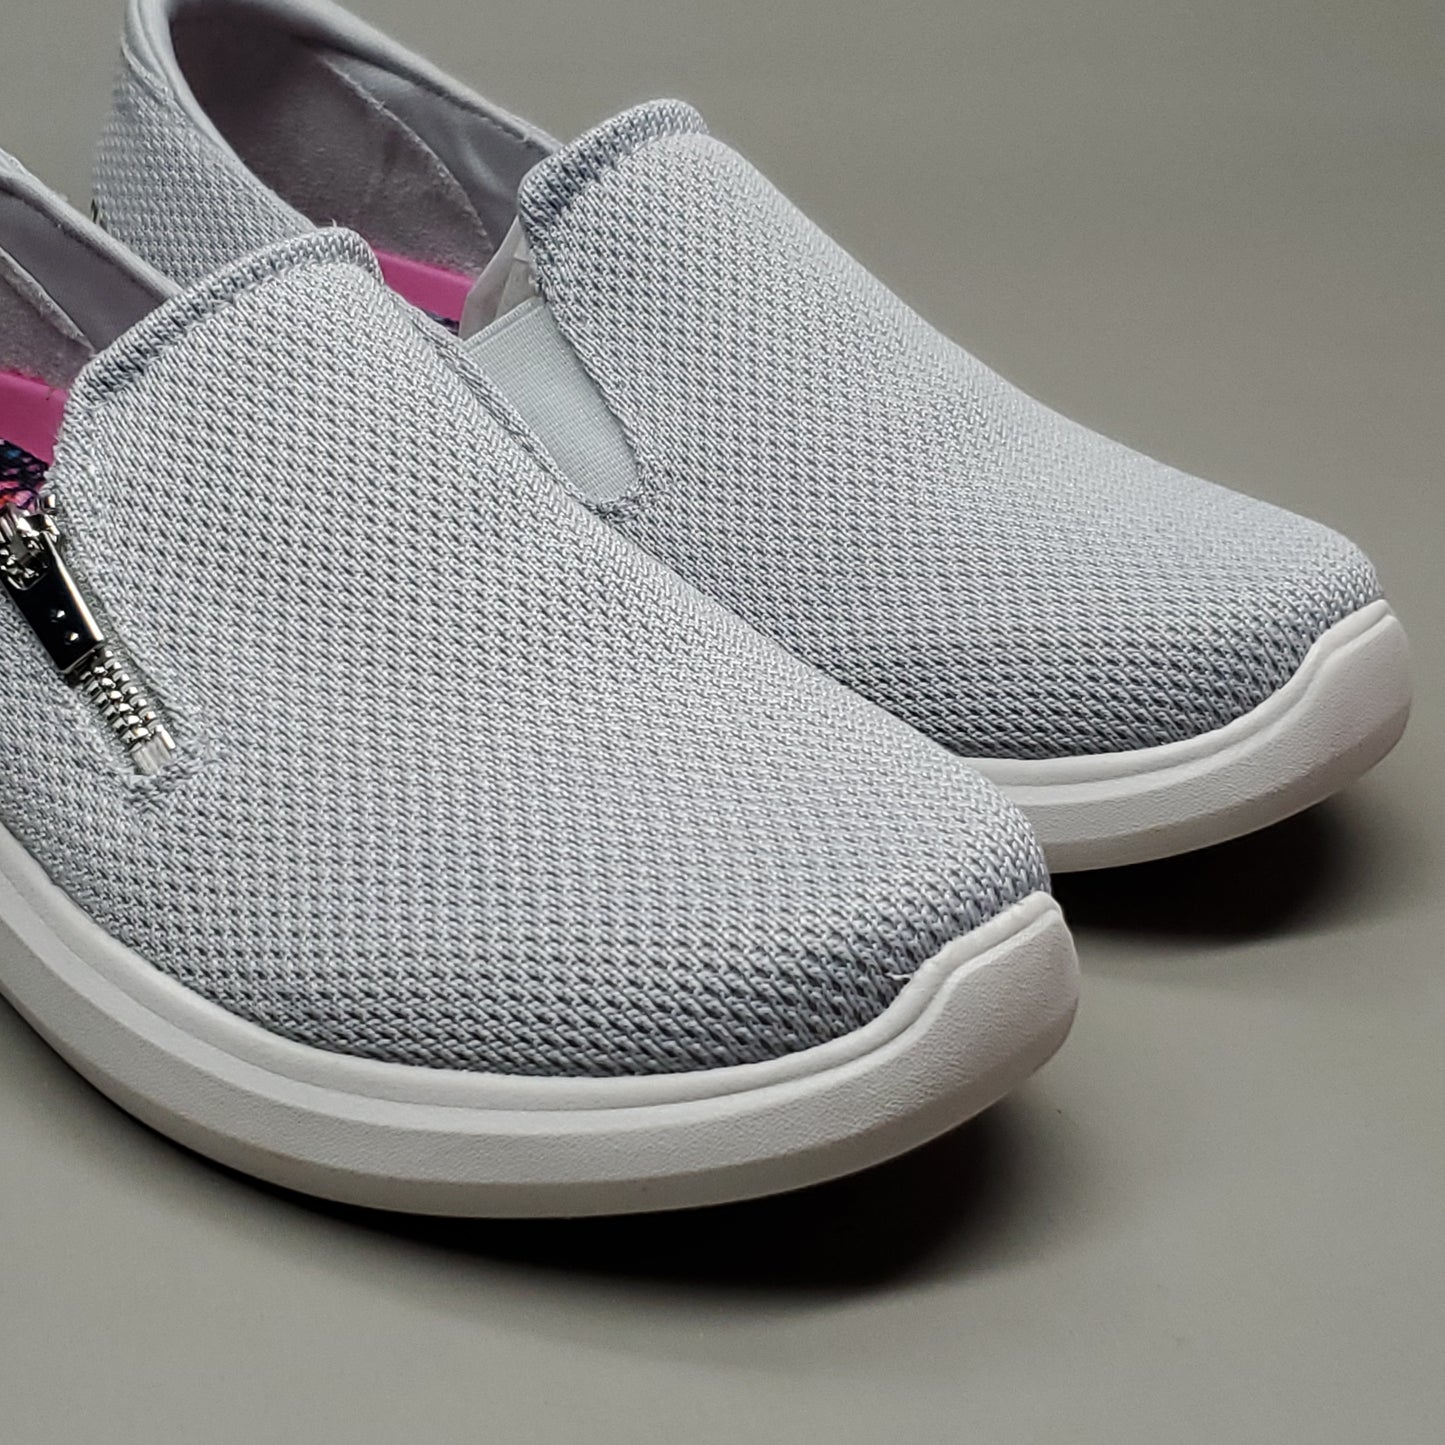 RYKA Mesh Walking Sneaker Shoes Women's SZ 9 W Ally Floral Vapor Grey (New)